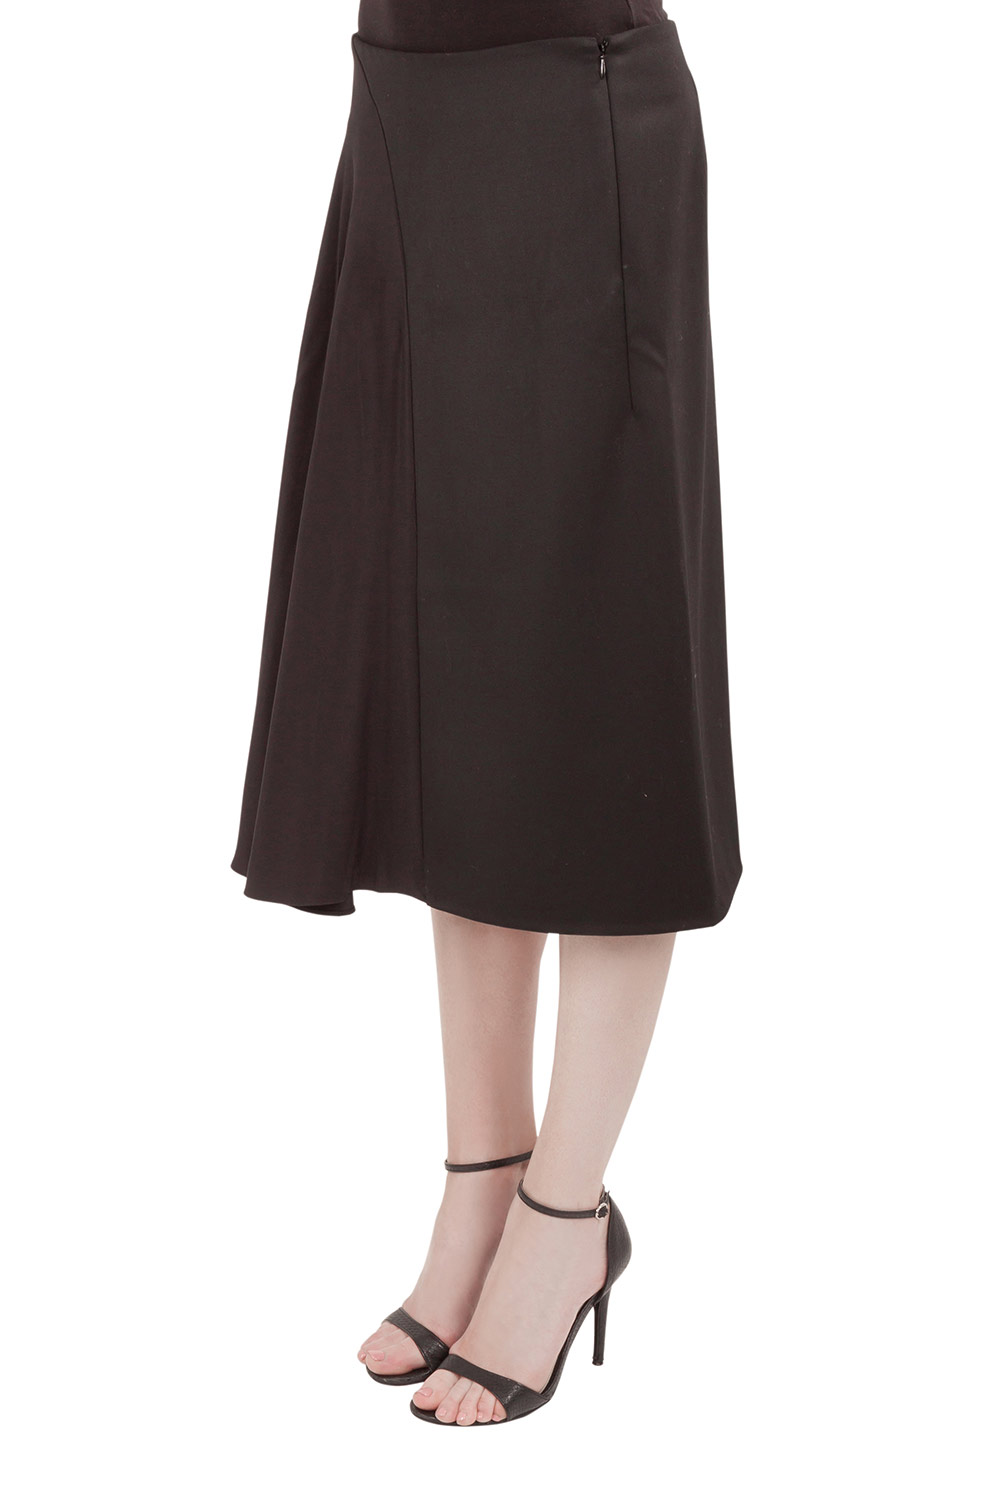 

3.1 Phillip Lim Black Wool Asymmetric Draped Silk Trim A Line Horizon Skirt